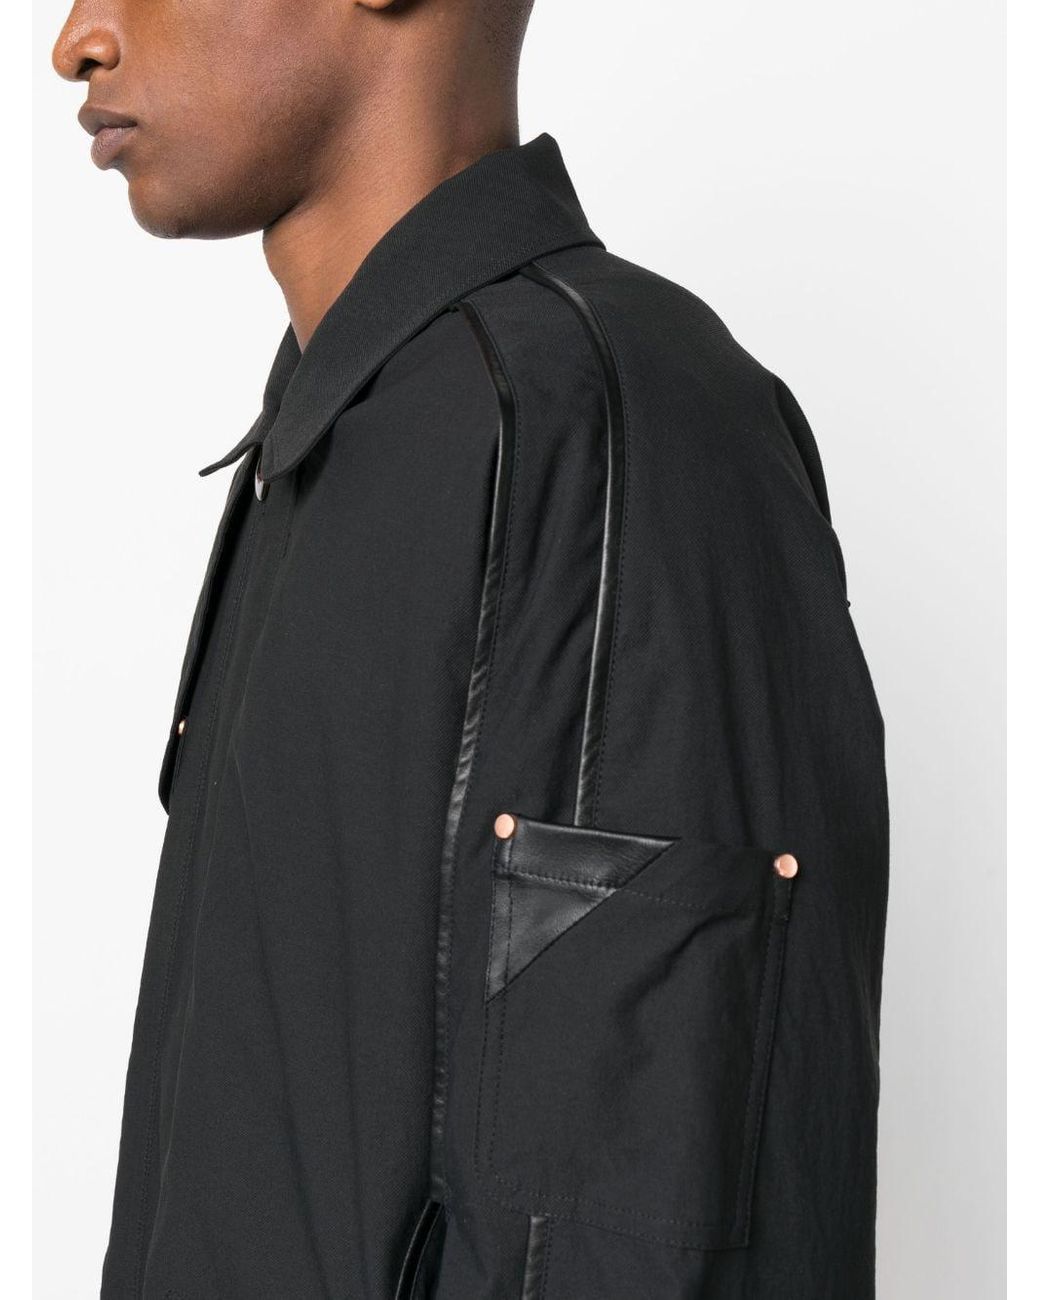 Kiko Kostadinov Uniform Spread-collar Jacket in Black for Men | Lyst